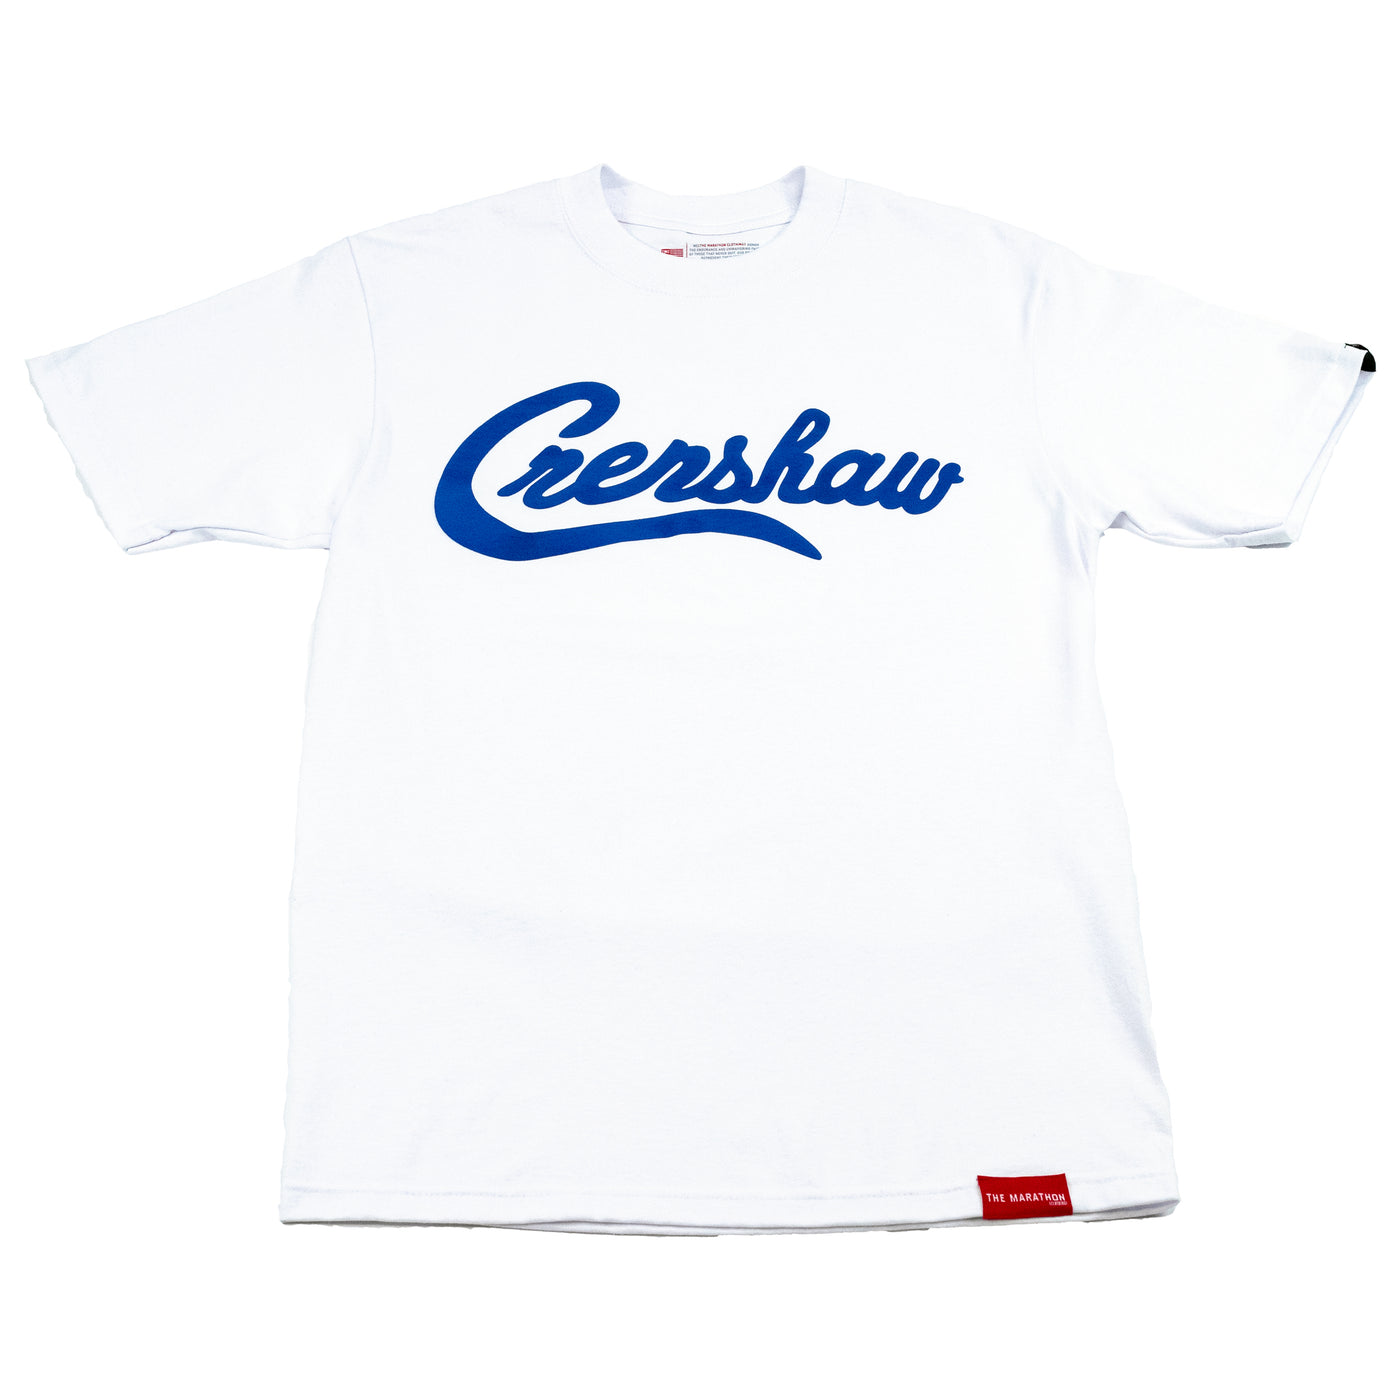 Crenshaw T-Shirt - White/Royal - Front